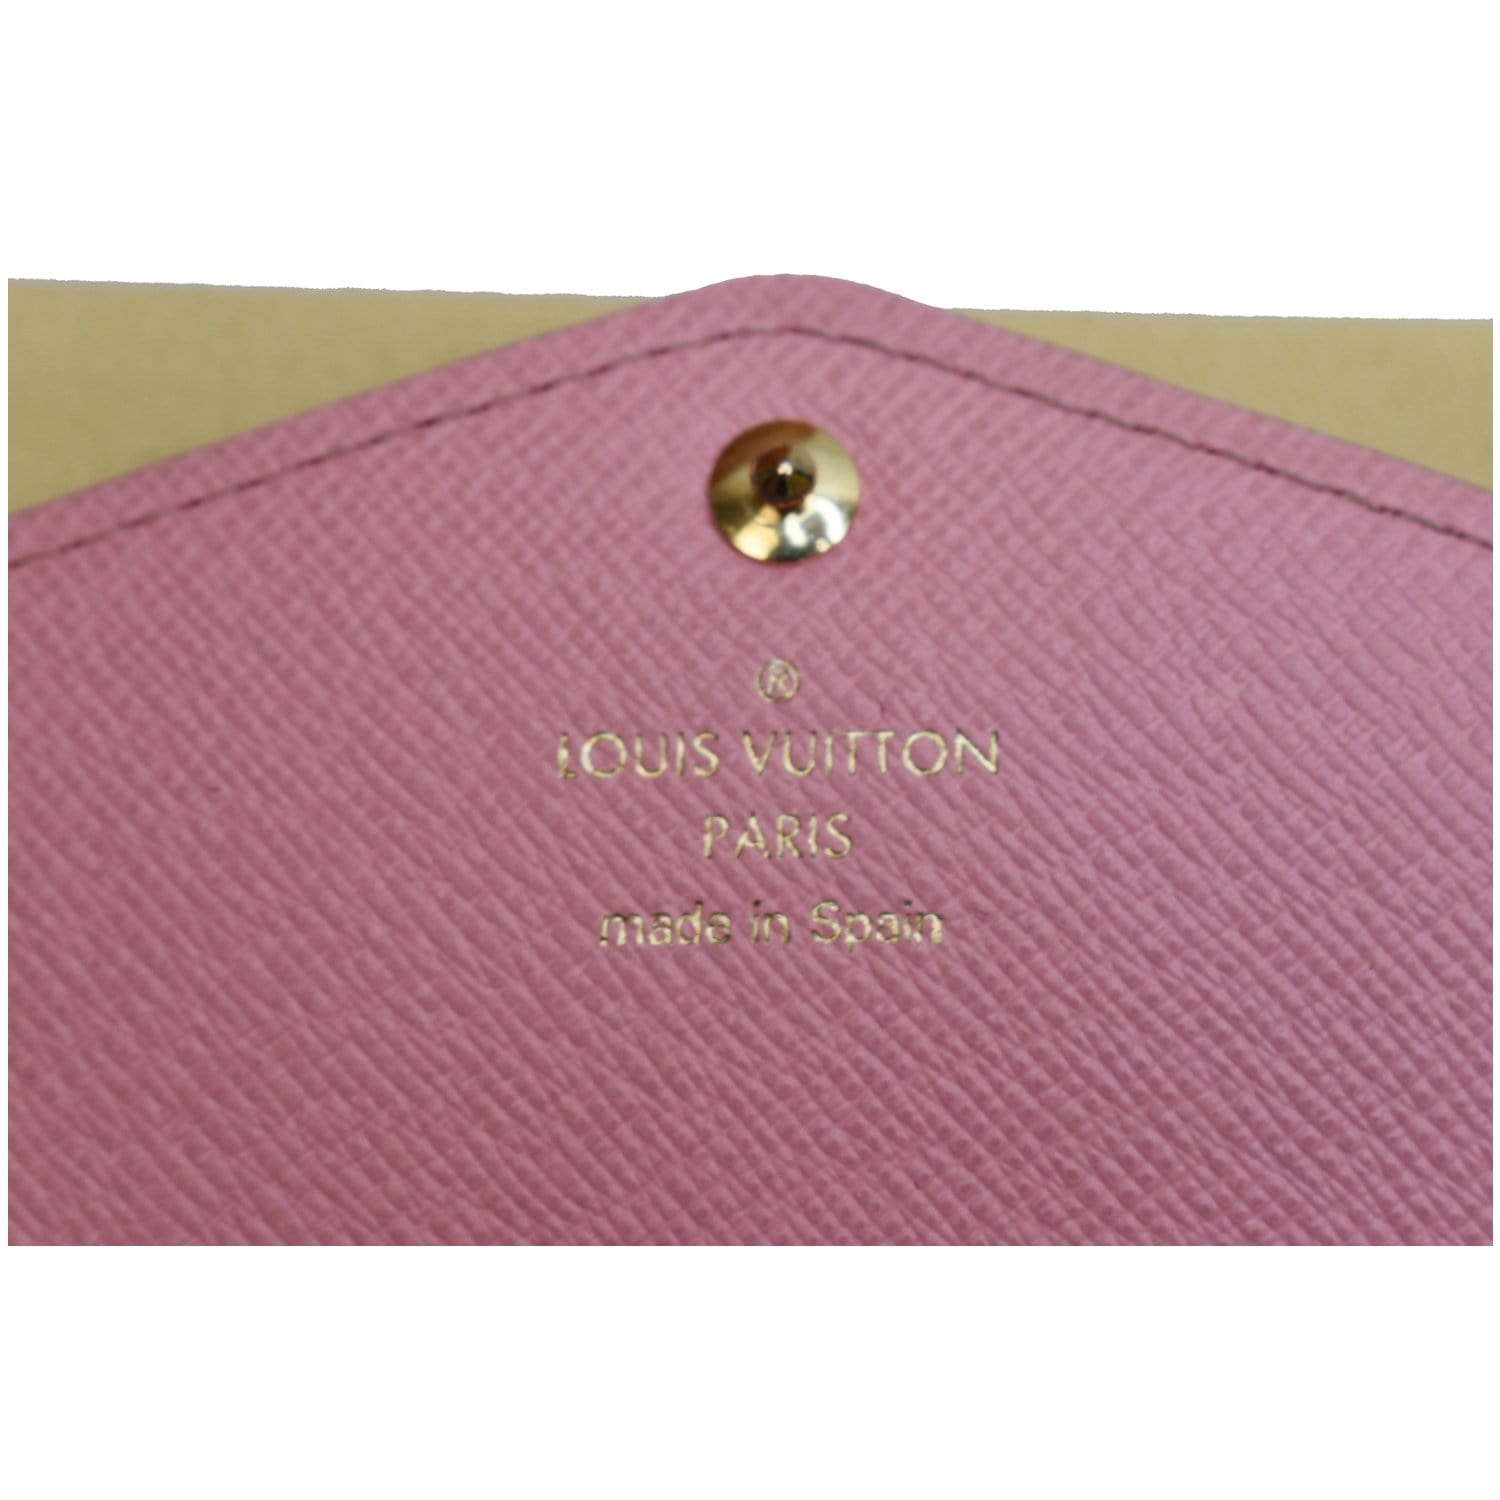 Louis Vuitton Monogram Sarah Wallet, Purple